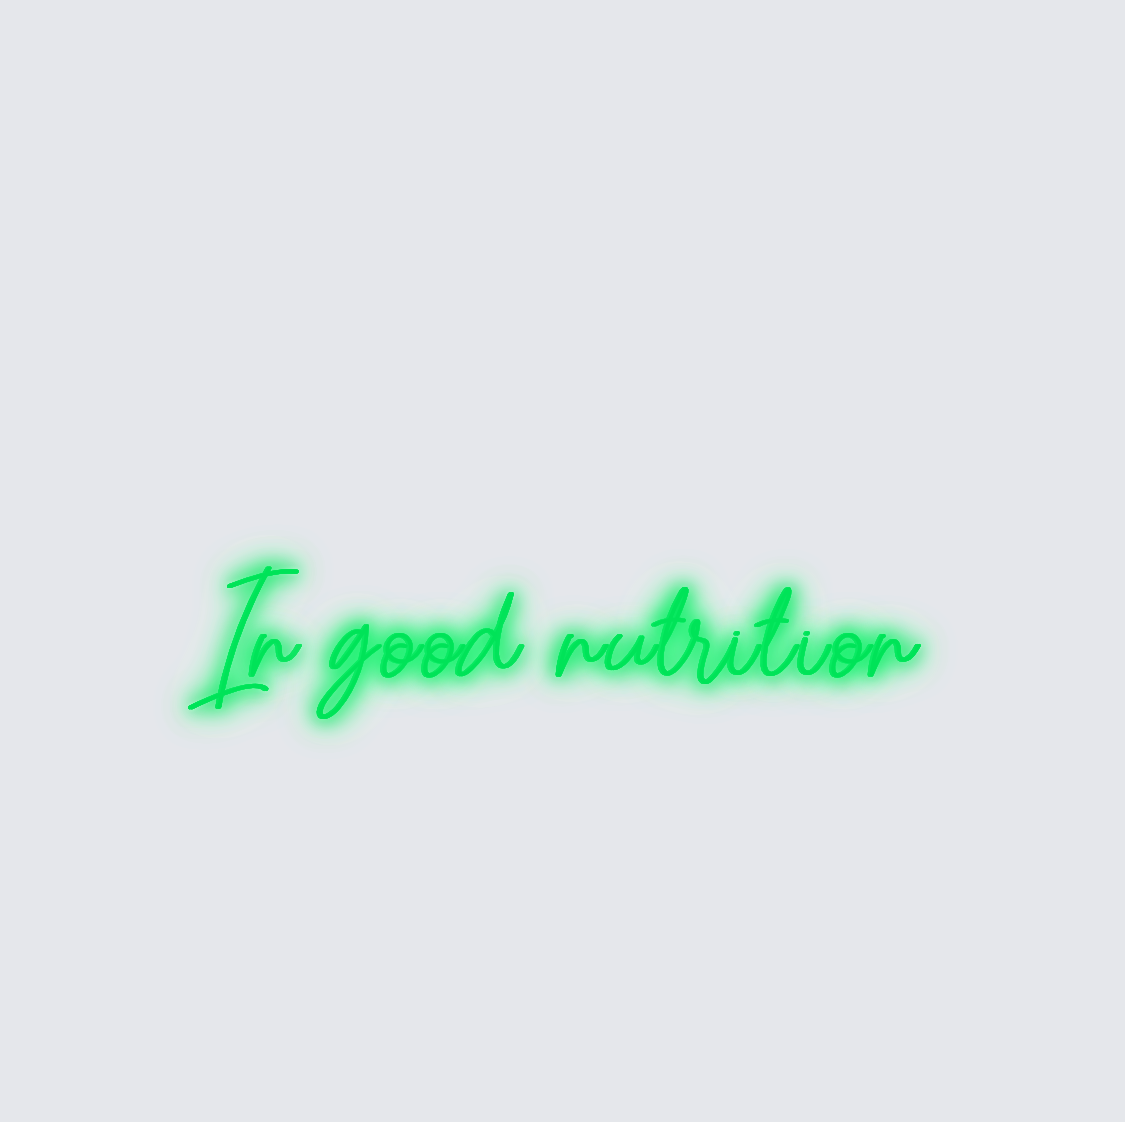 Custom neon sign - In good nutrition